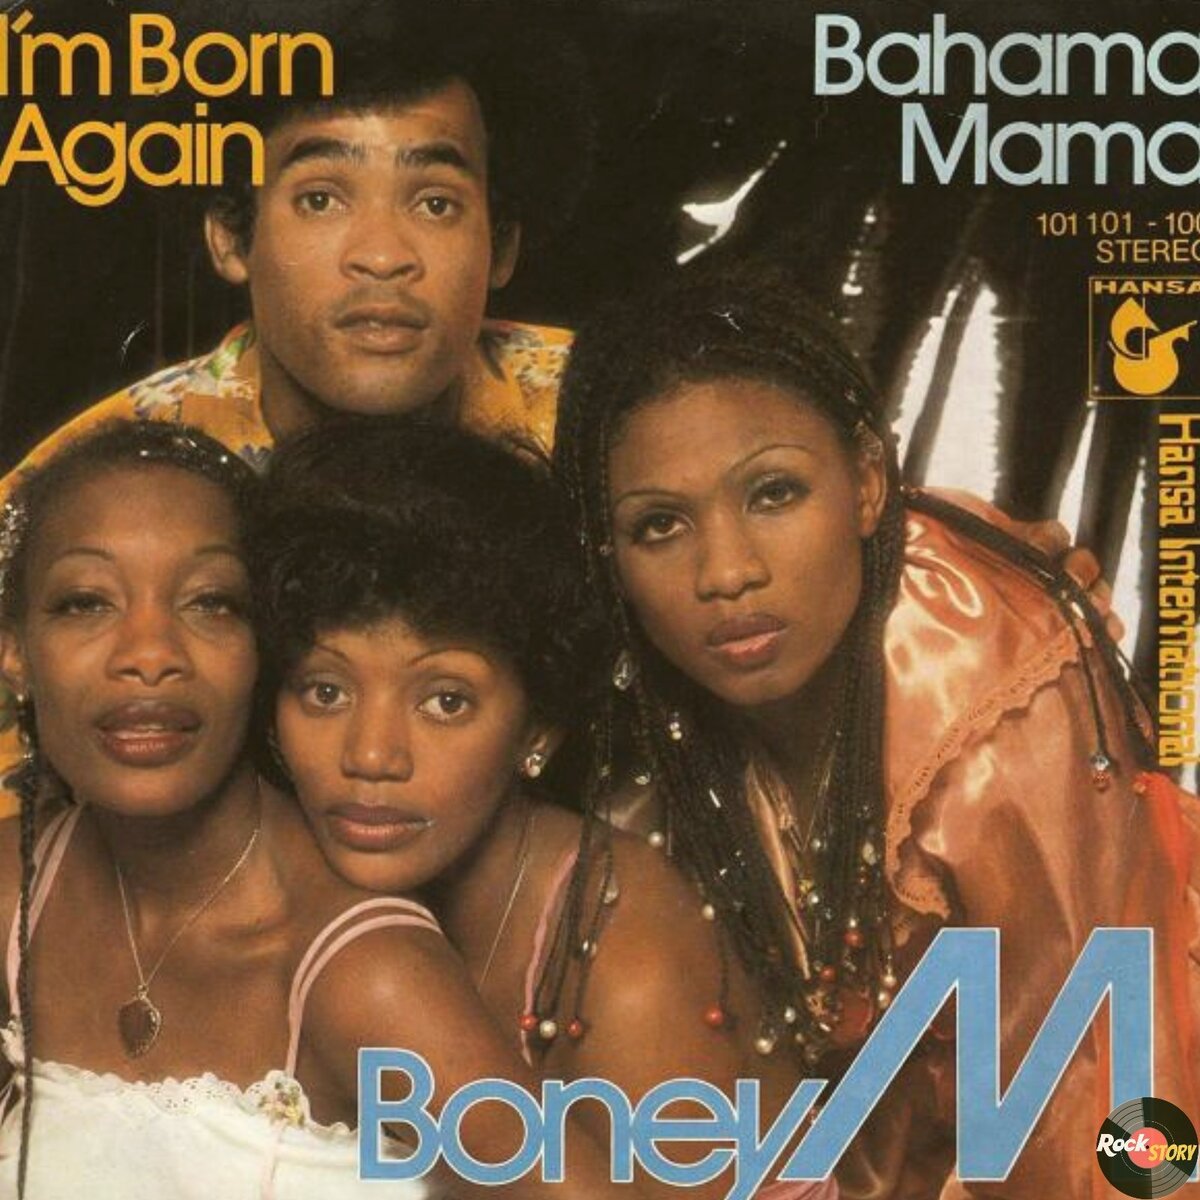 Бони м багамы мама. Группа Boney m.. Группа Бони м 1976. Группа Boney m. в 80. Обложка группы Бони м.